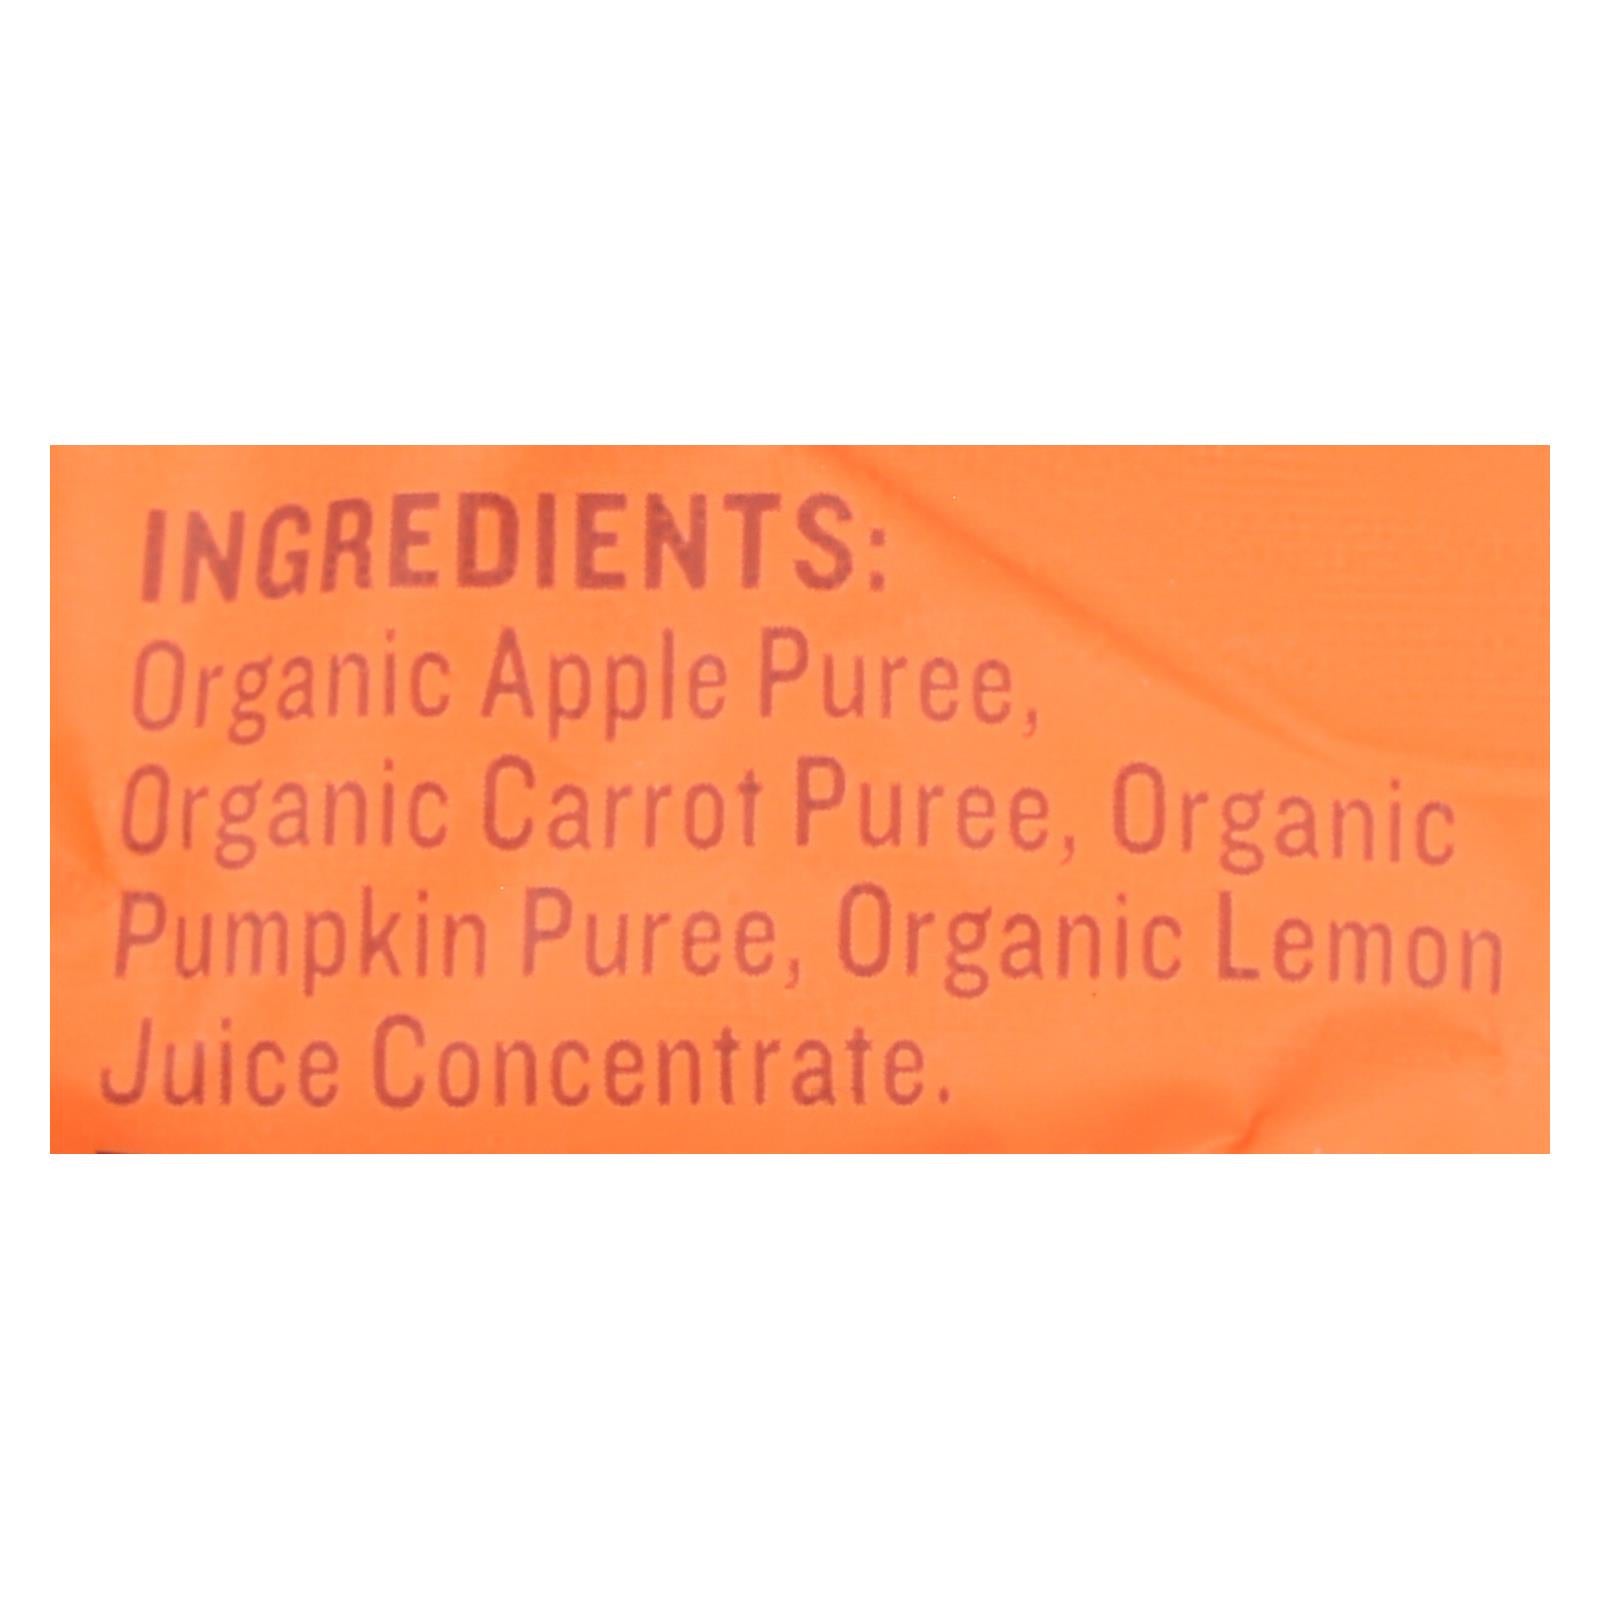 Peter Rabbit Organics Baby Food - Organic - Vegetable And Fruit Puree - Pumpkin Carrot And Apple - 4.4 Oz - Case Of 10